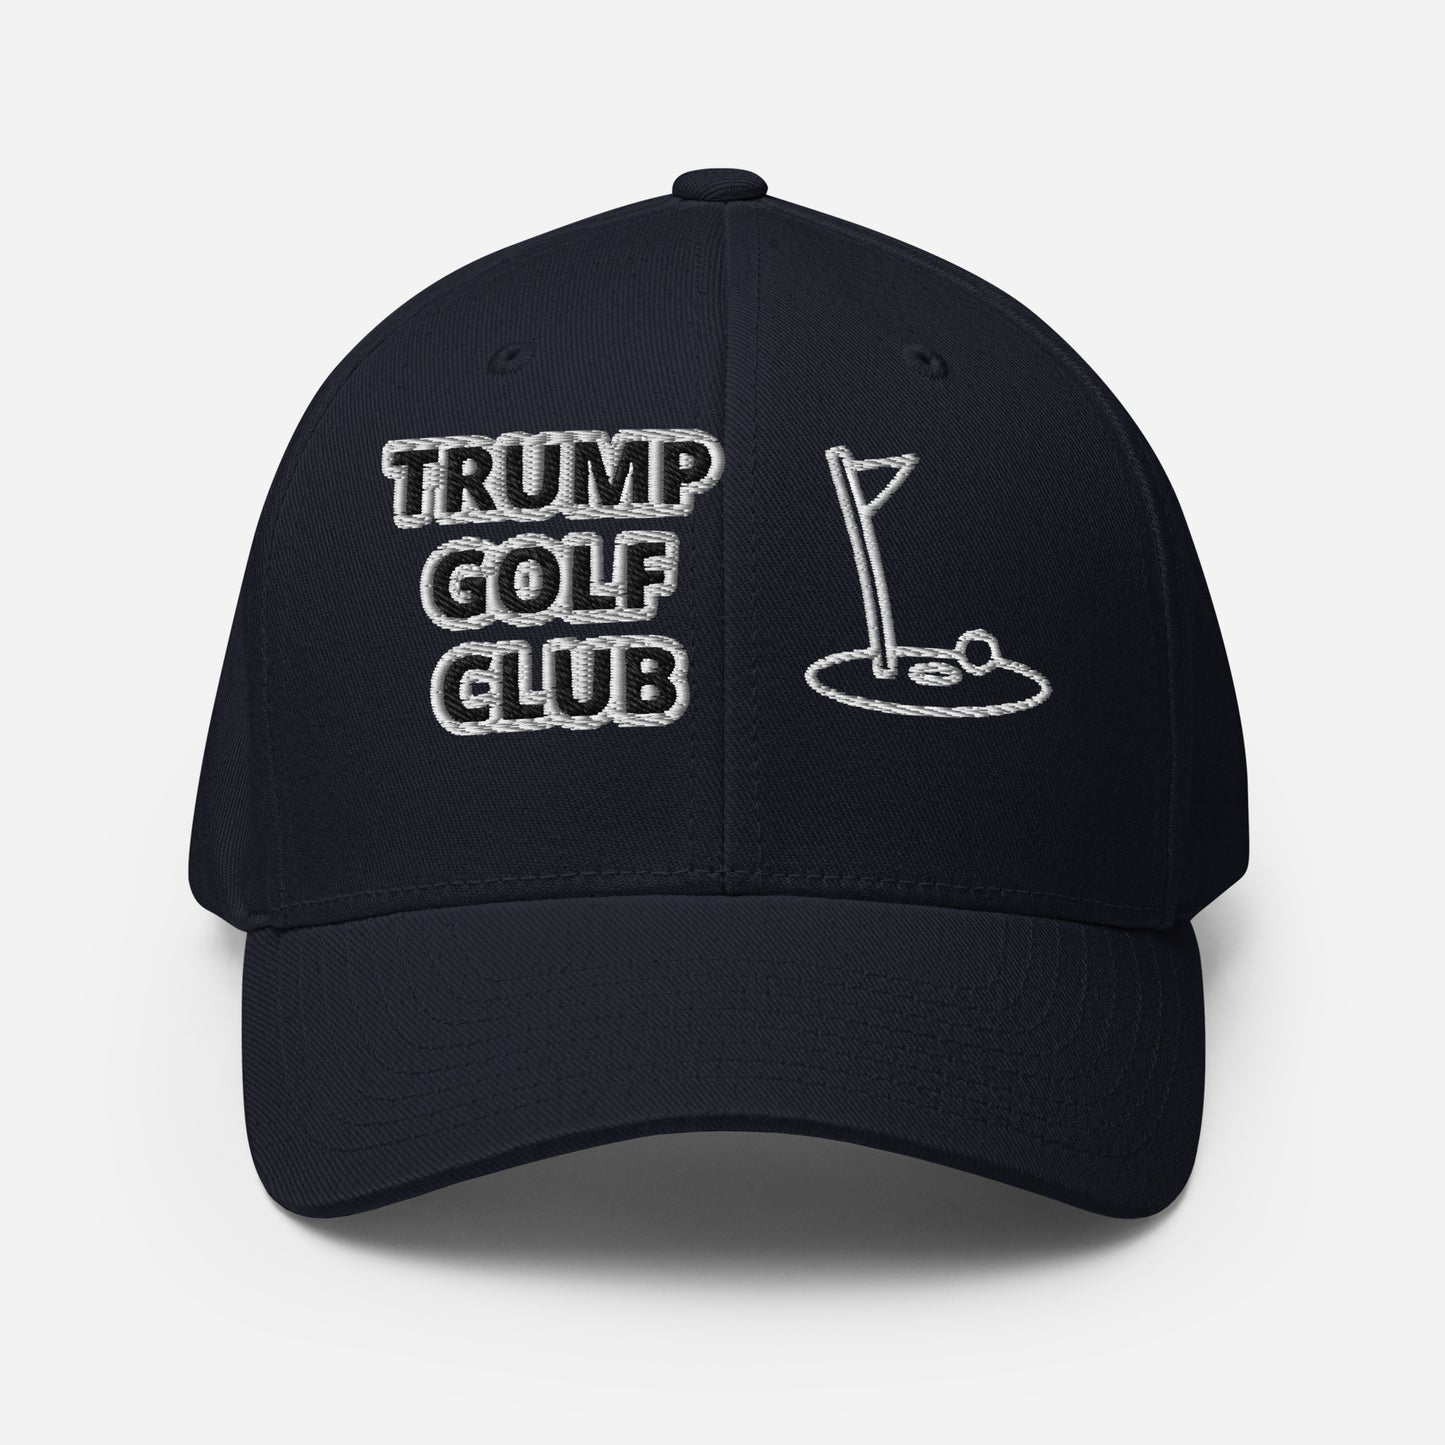 TRUMP GOLF CLUB Structured Twill Cap